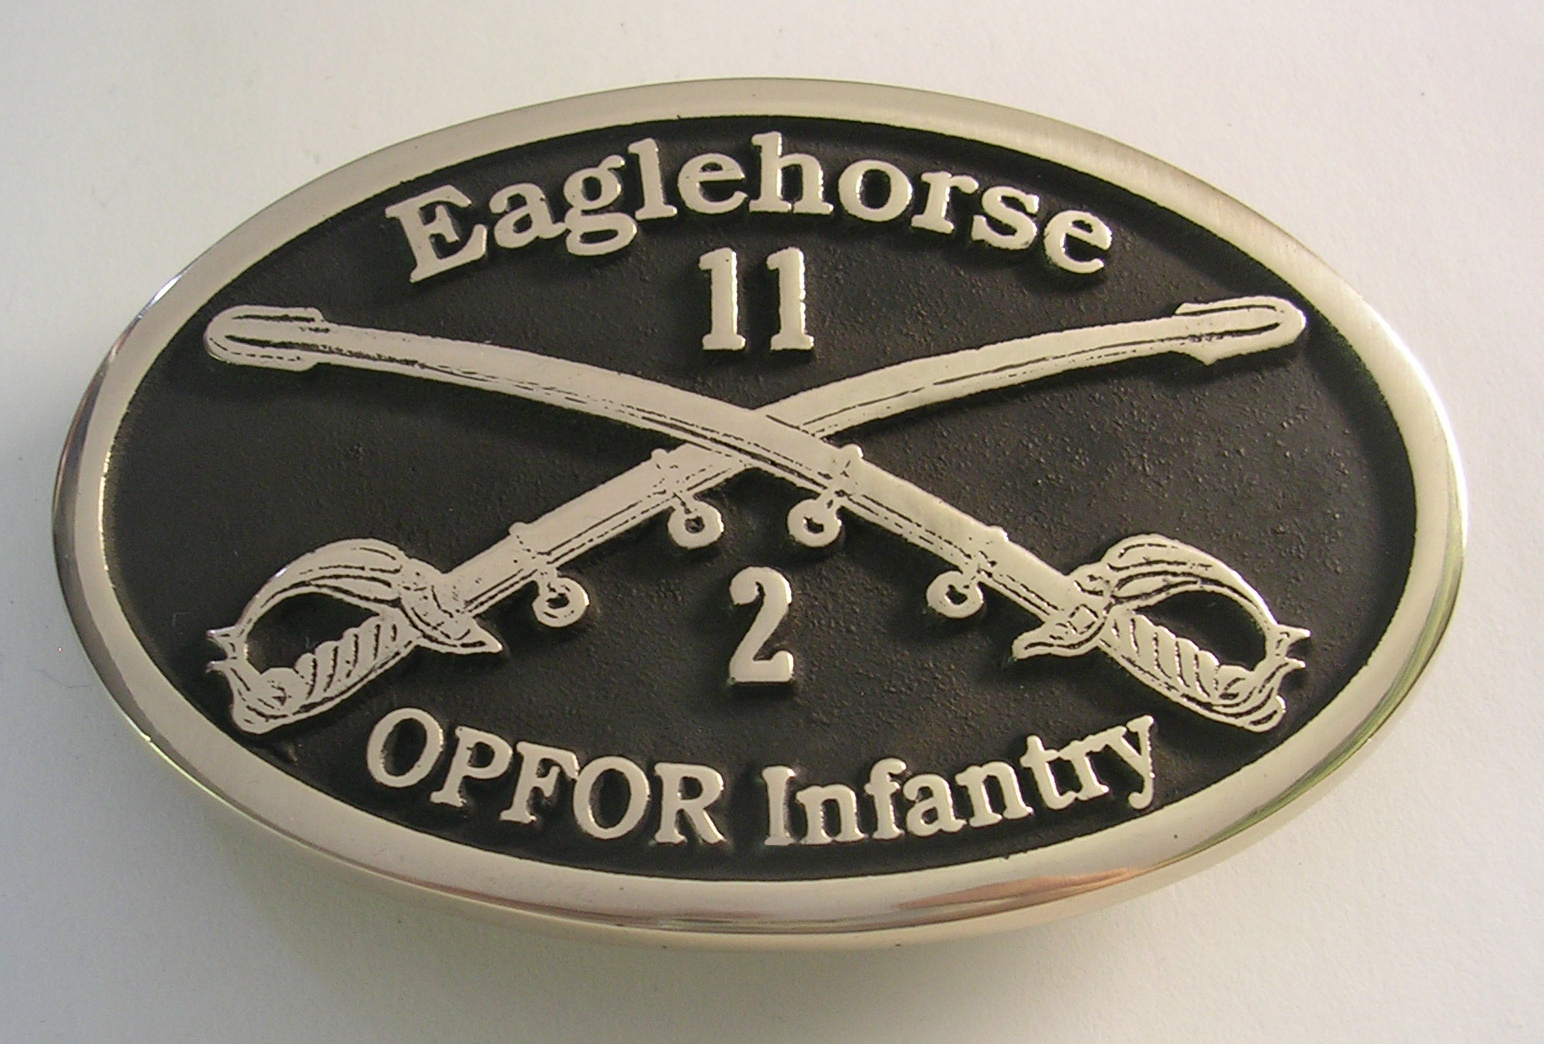 OPFOR Infantry Buckle